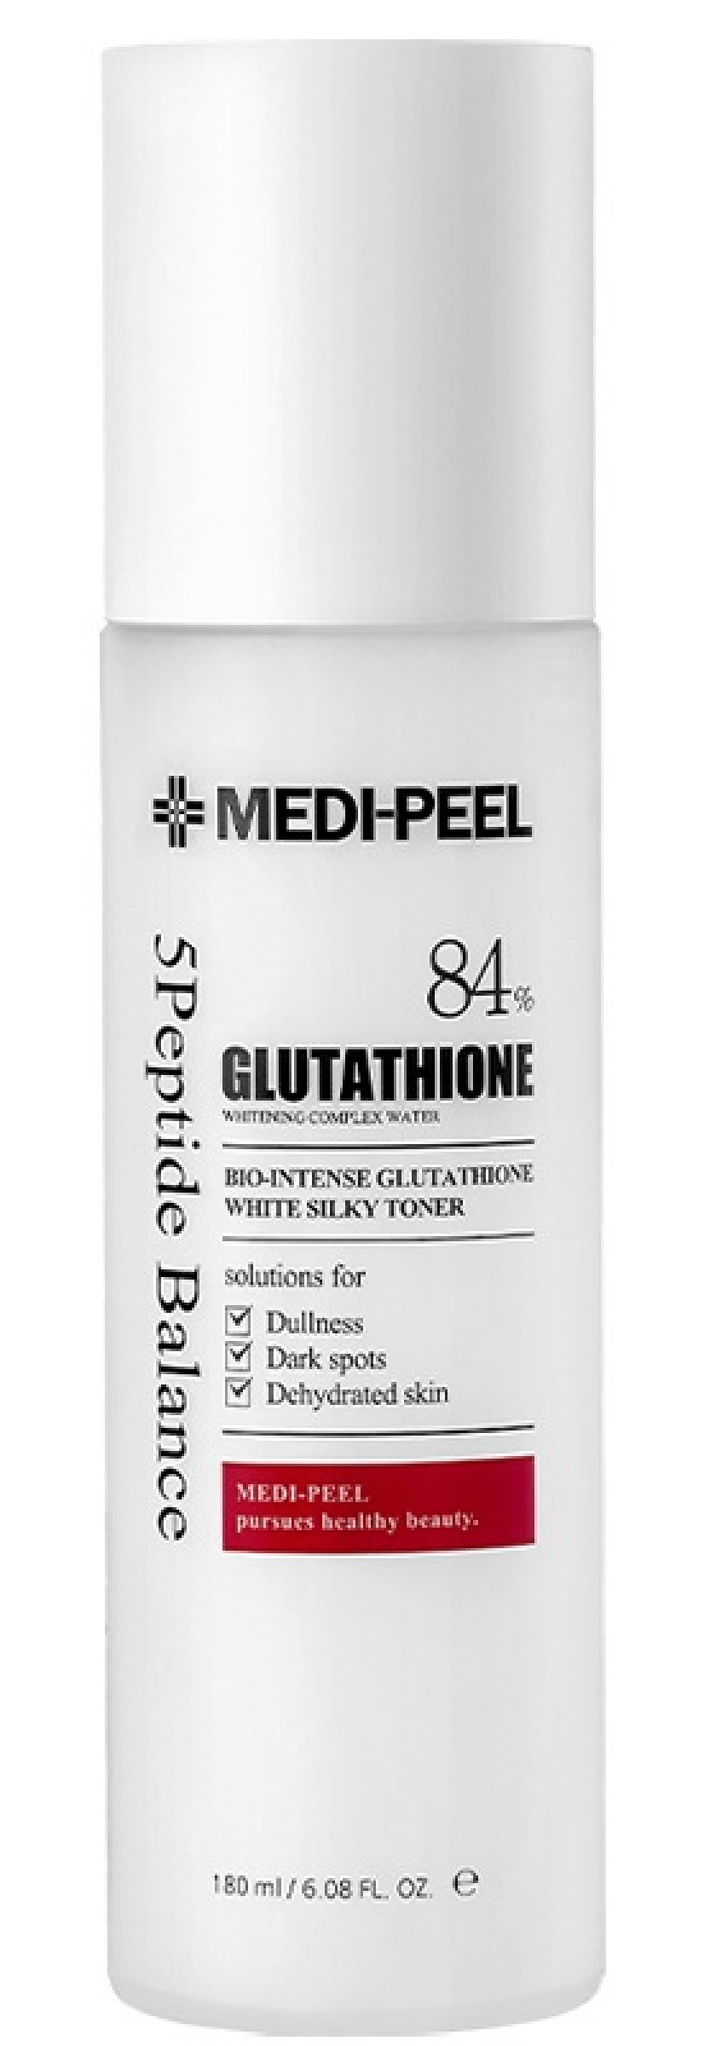 MEDI-PEEL Bio Intense Glutathione White Silky Toner